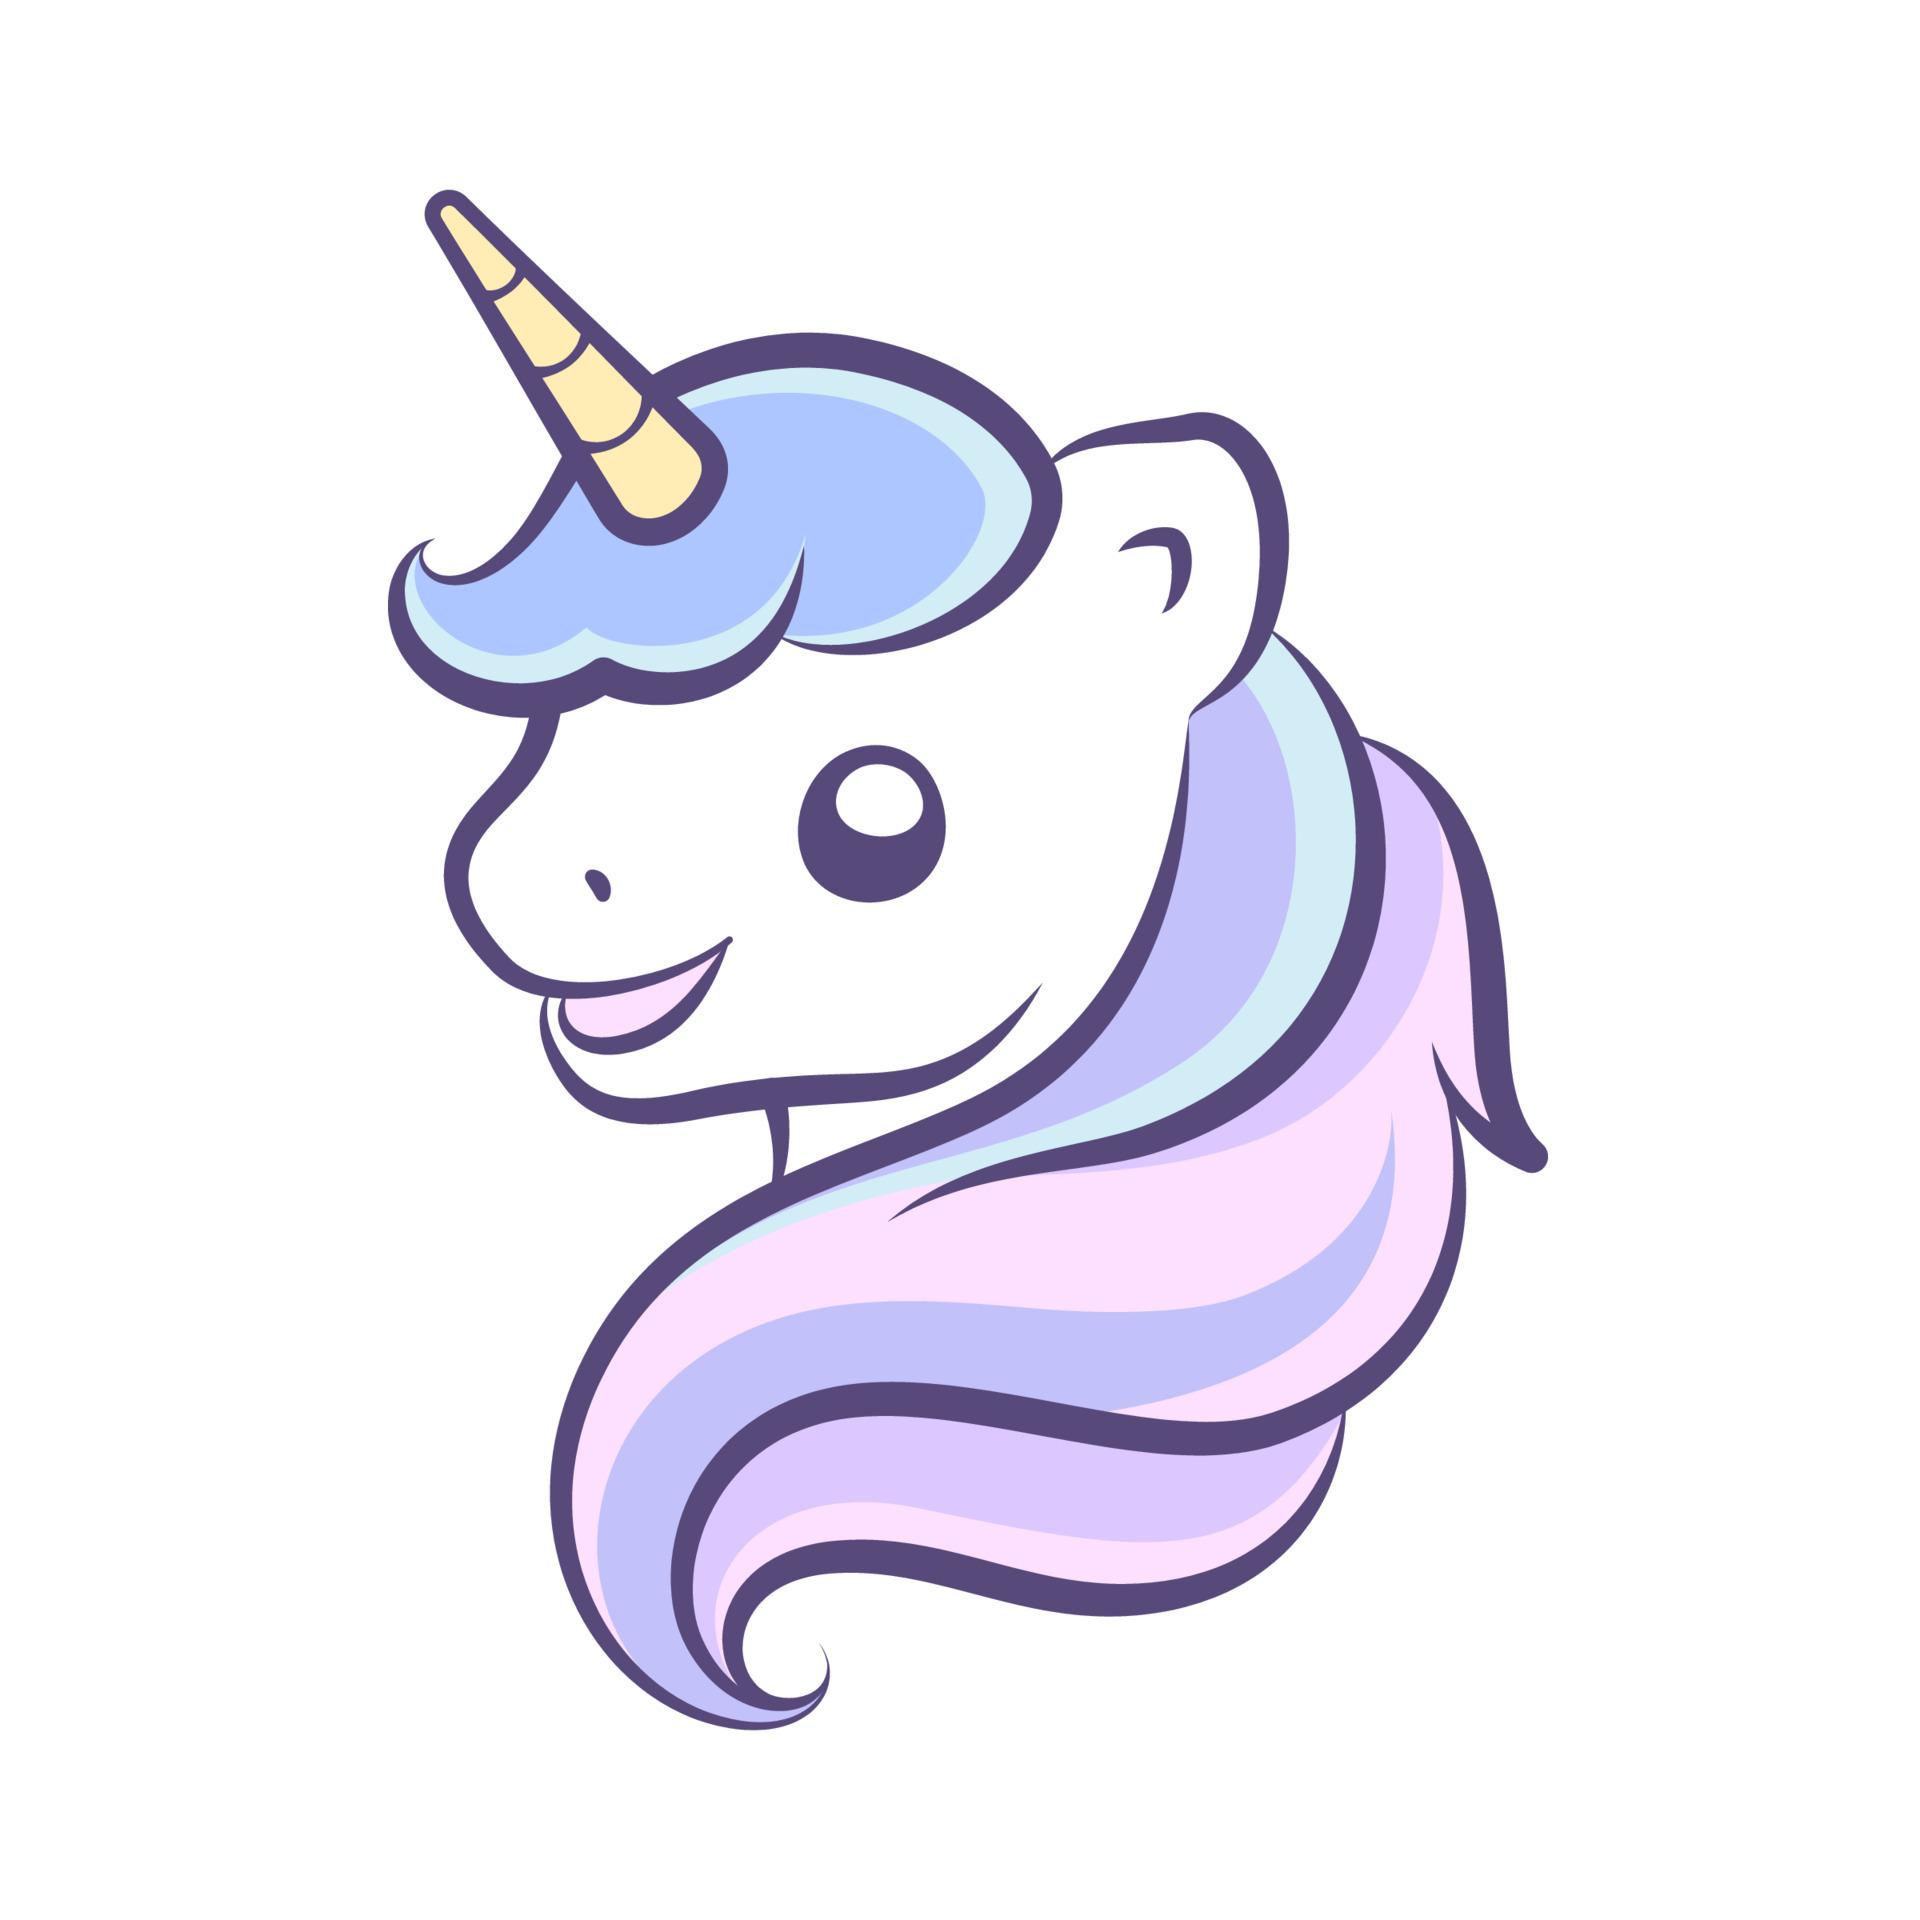 Cute happy unicorn head vector illustration. Mythical creature